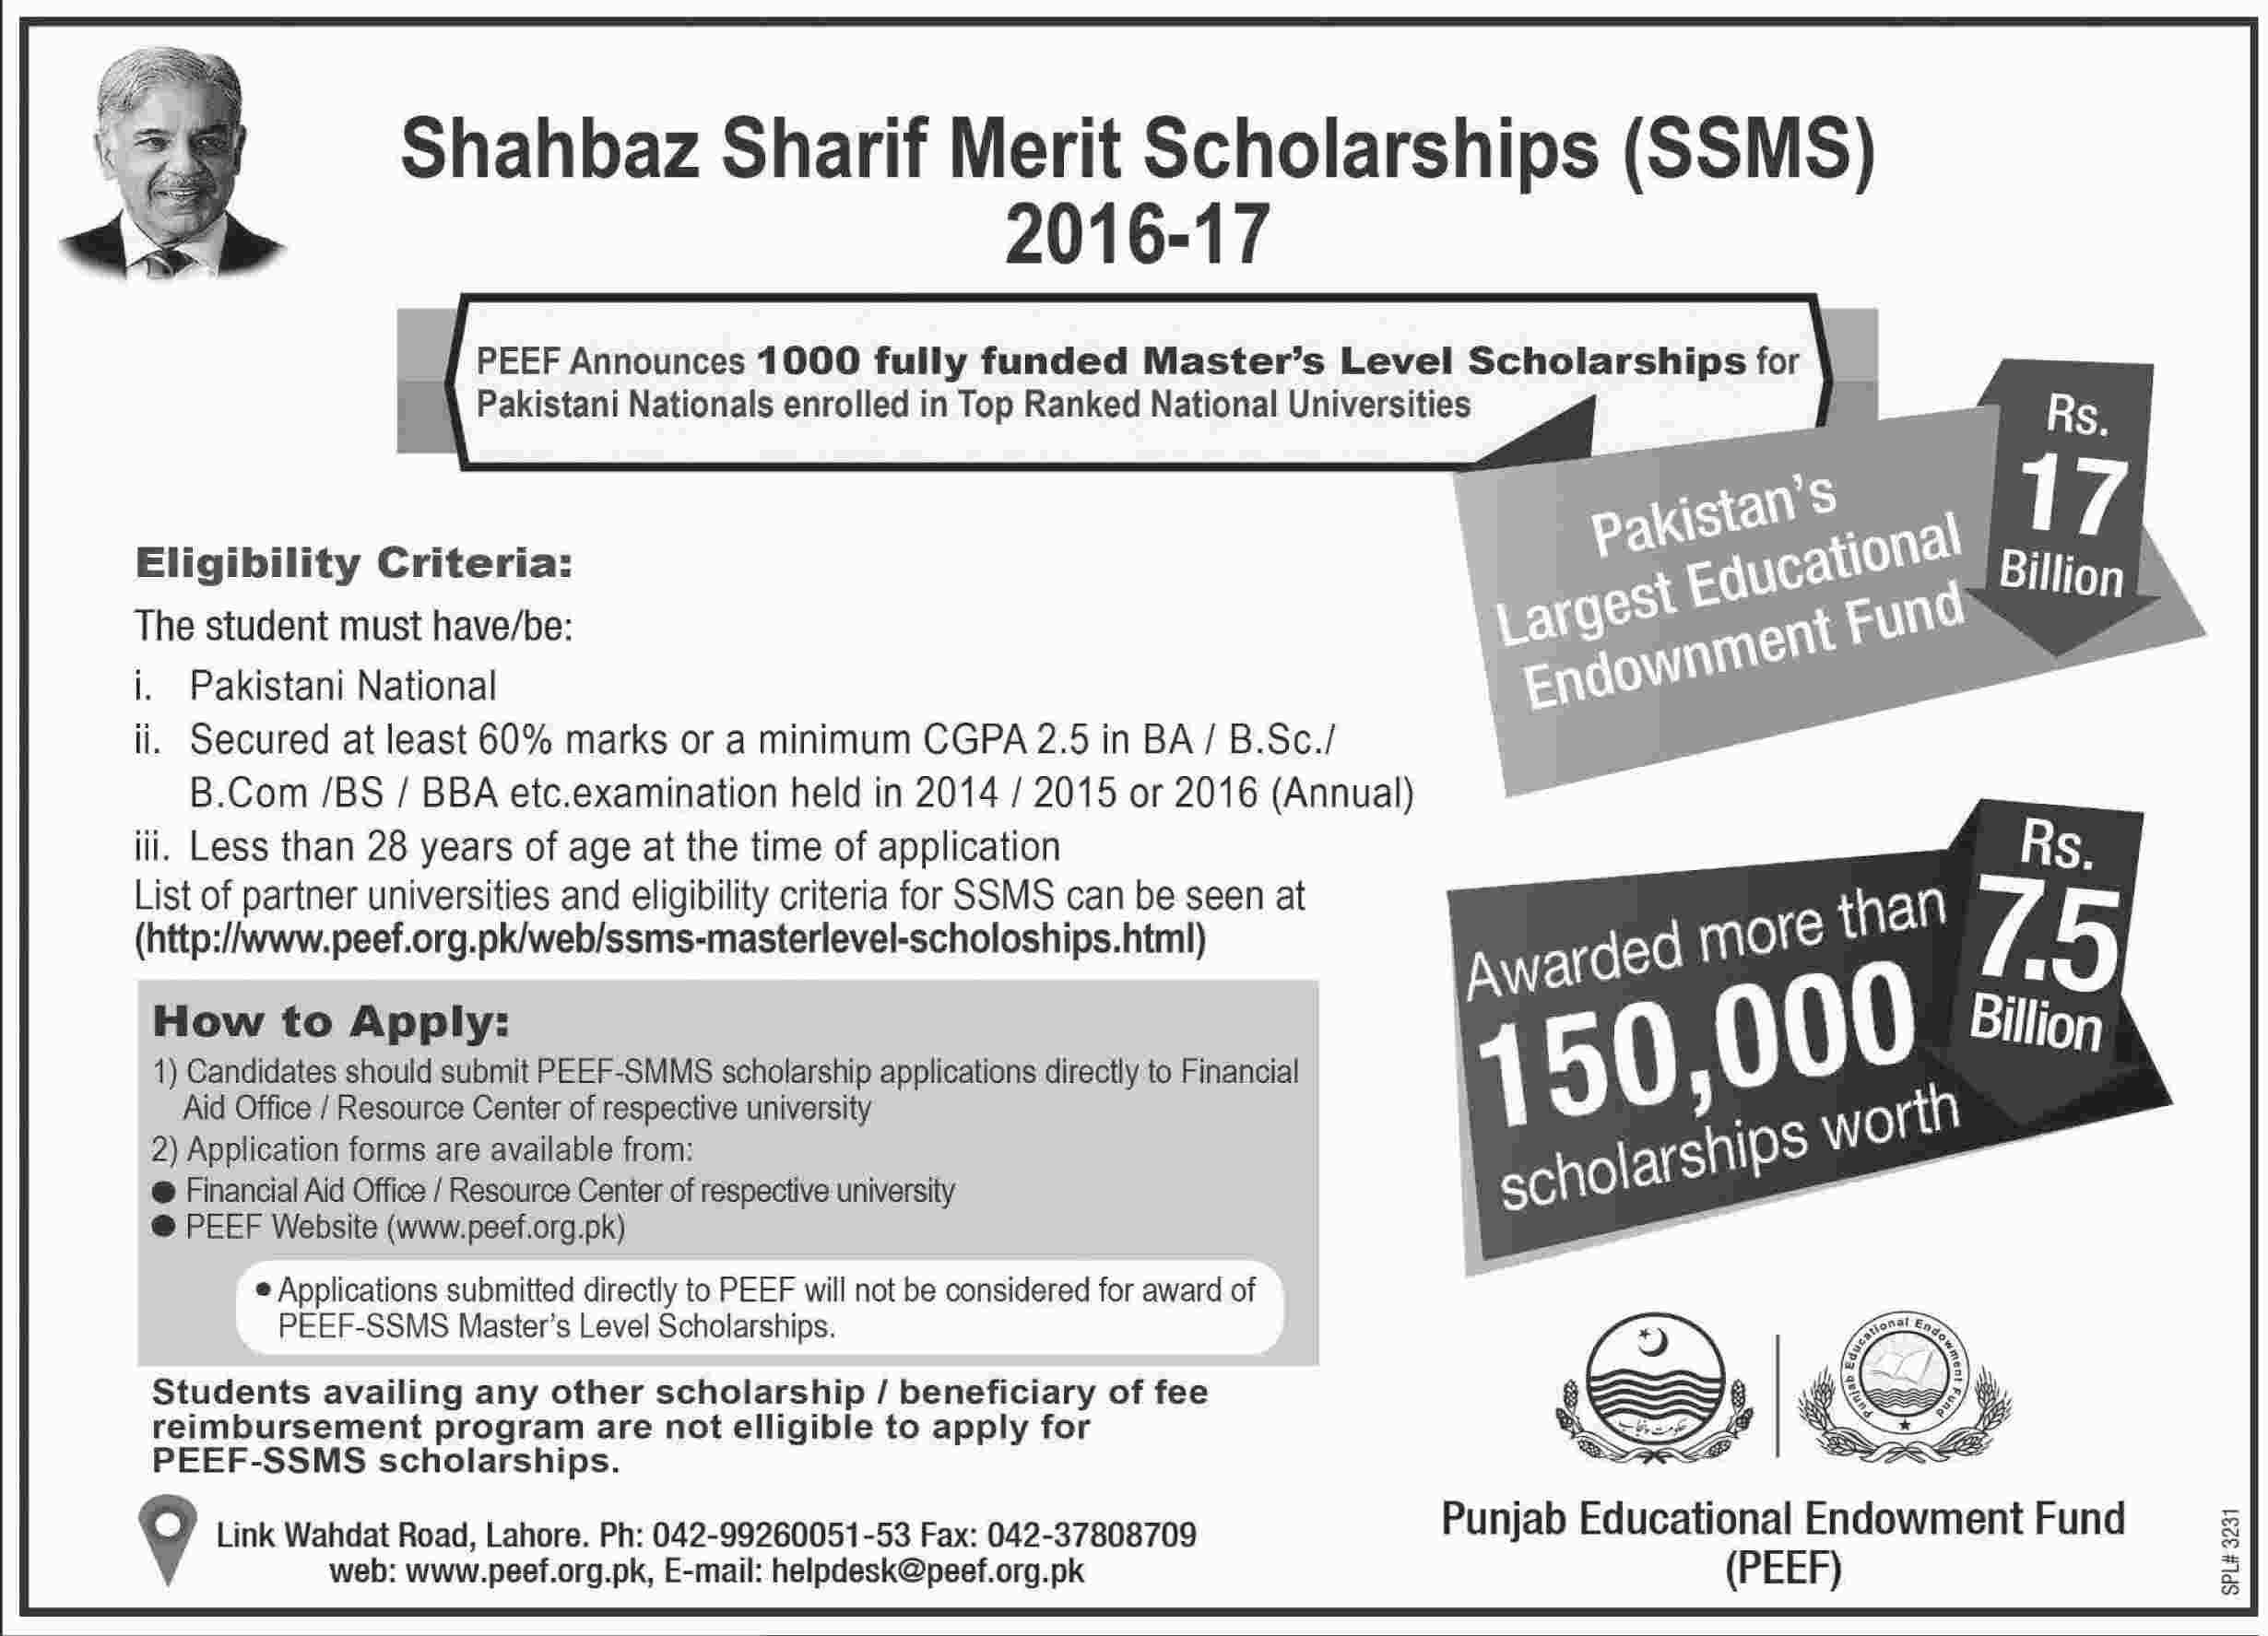 PEEF Master's Level Scholarships - Shahbaz Sharif Merit Scholarships (SSMS) 2016-17